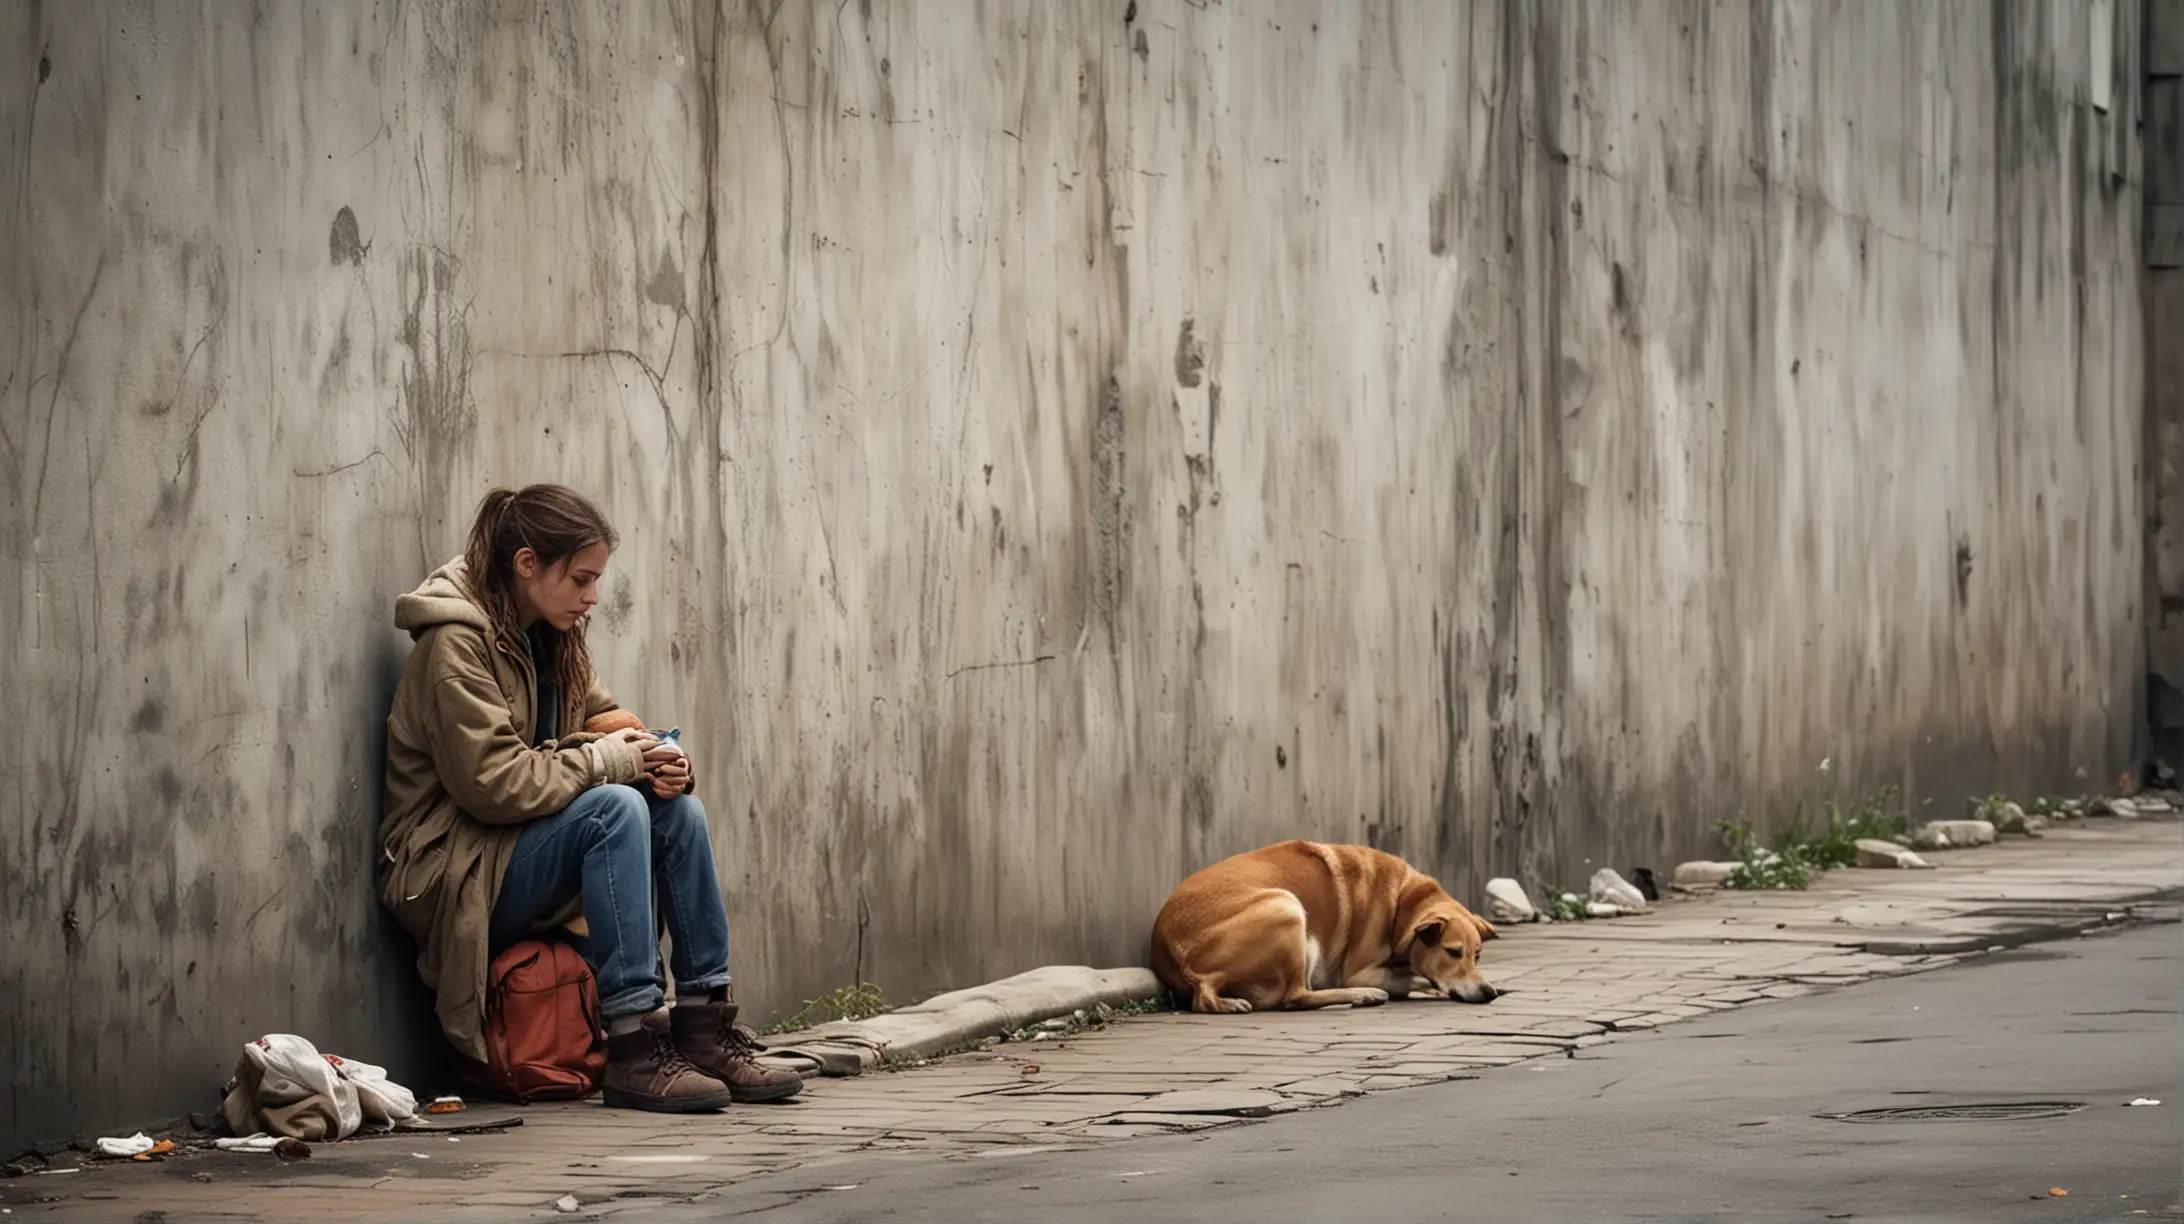 Urban Scene Homeless Girl with Dog on Grungy Street